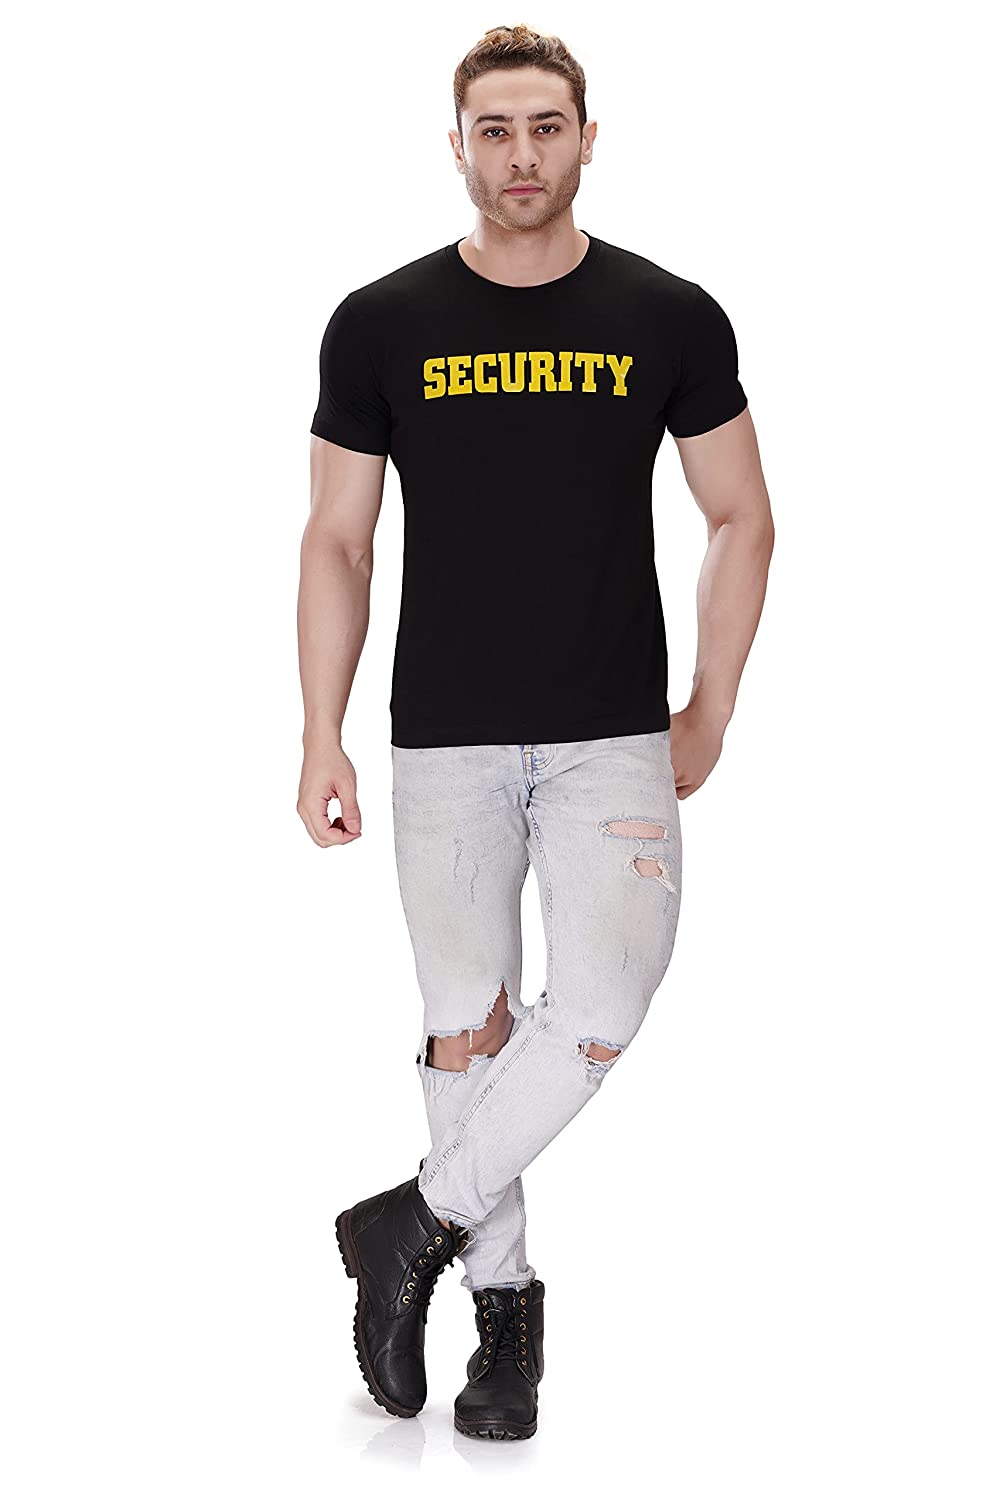 Security Guard 100% Cotton Round Neck T-Shirt - Black